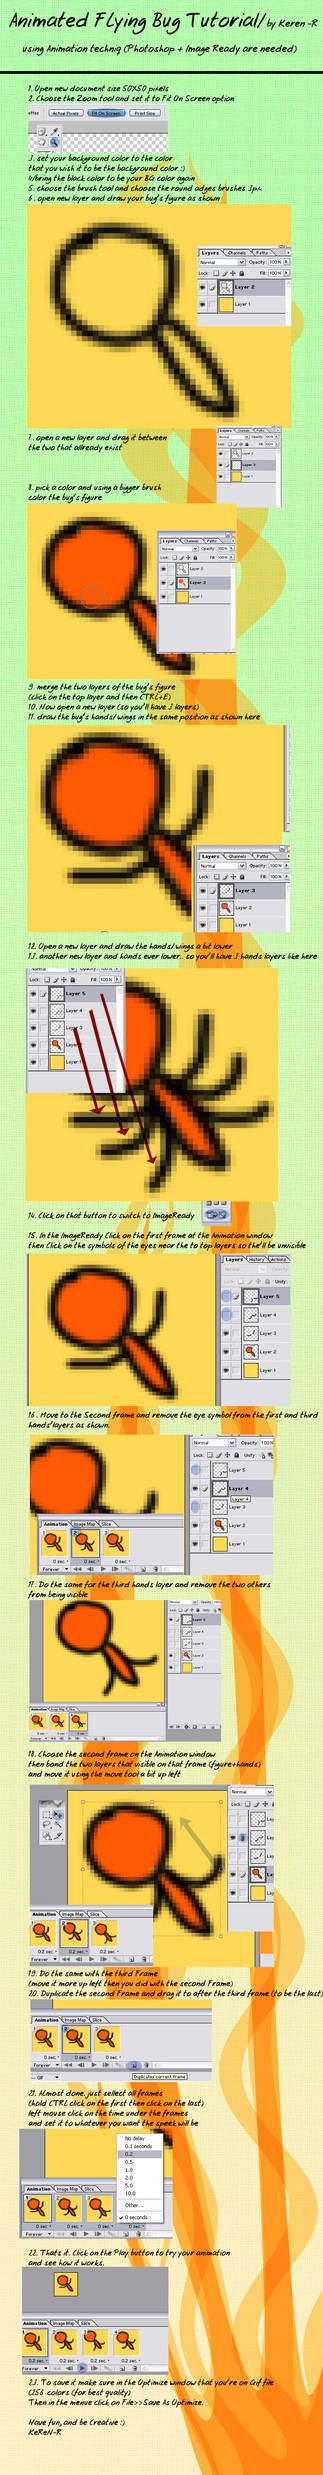 Animated Flying bug Tutorial